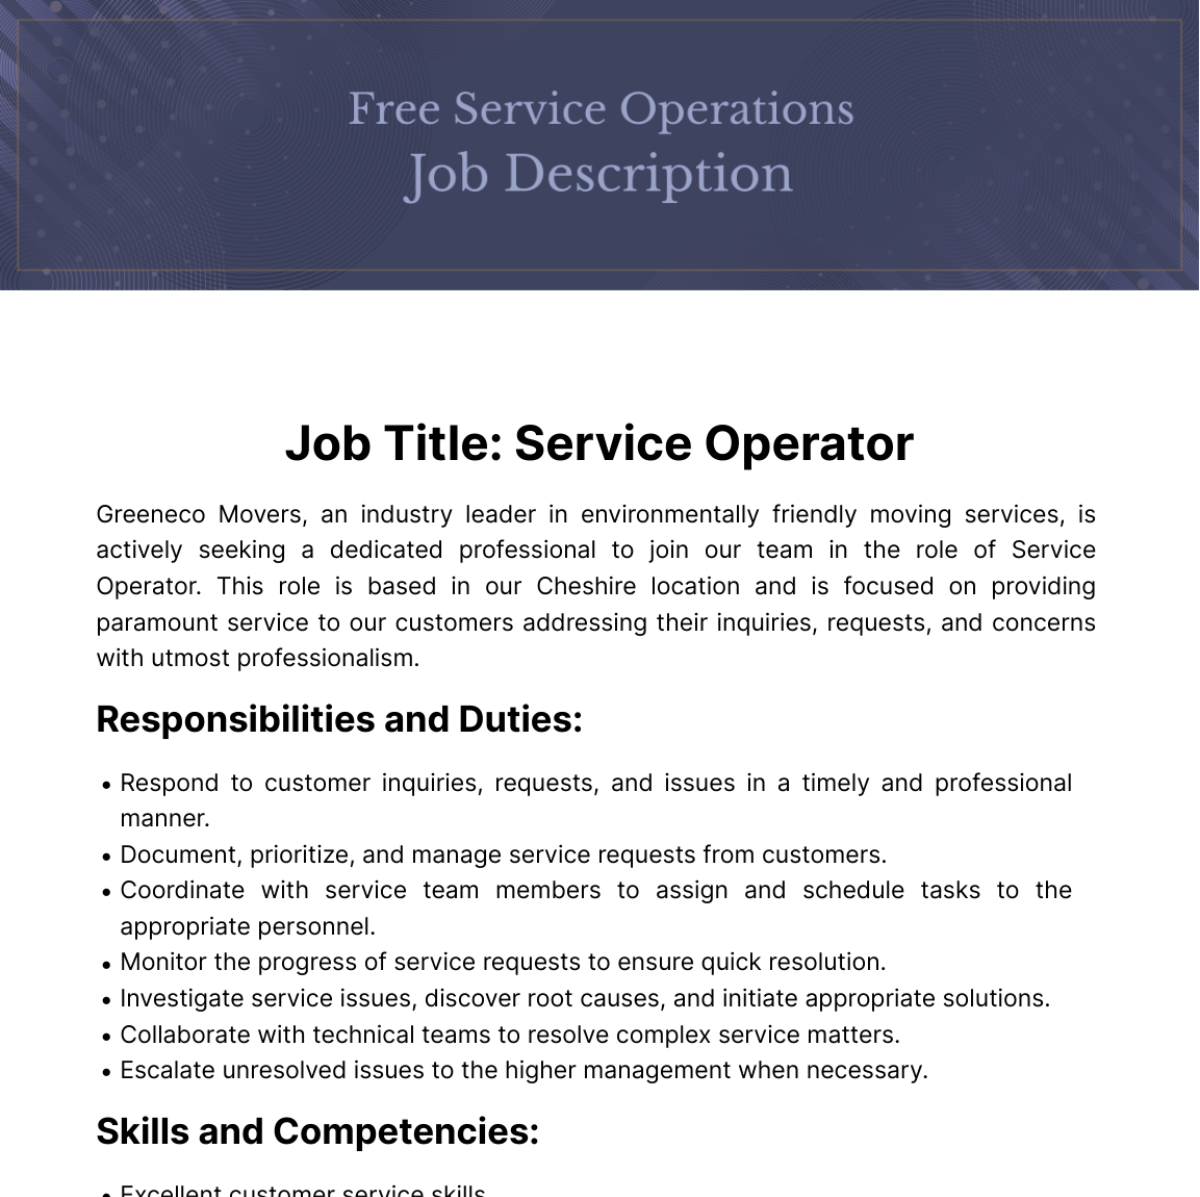 Free Service Operations Job Description Template